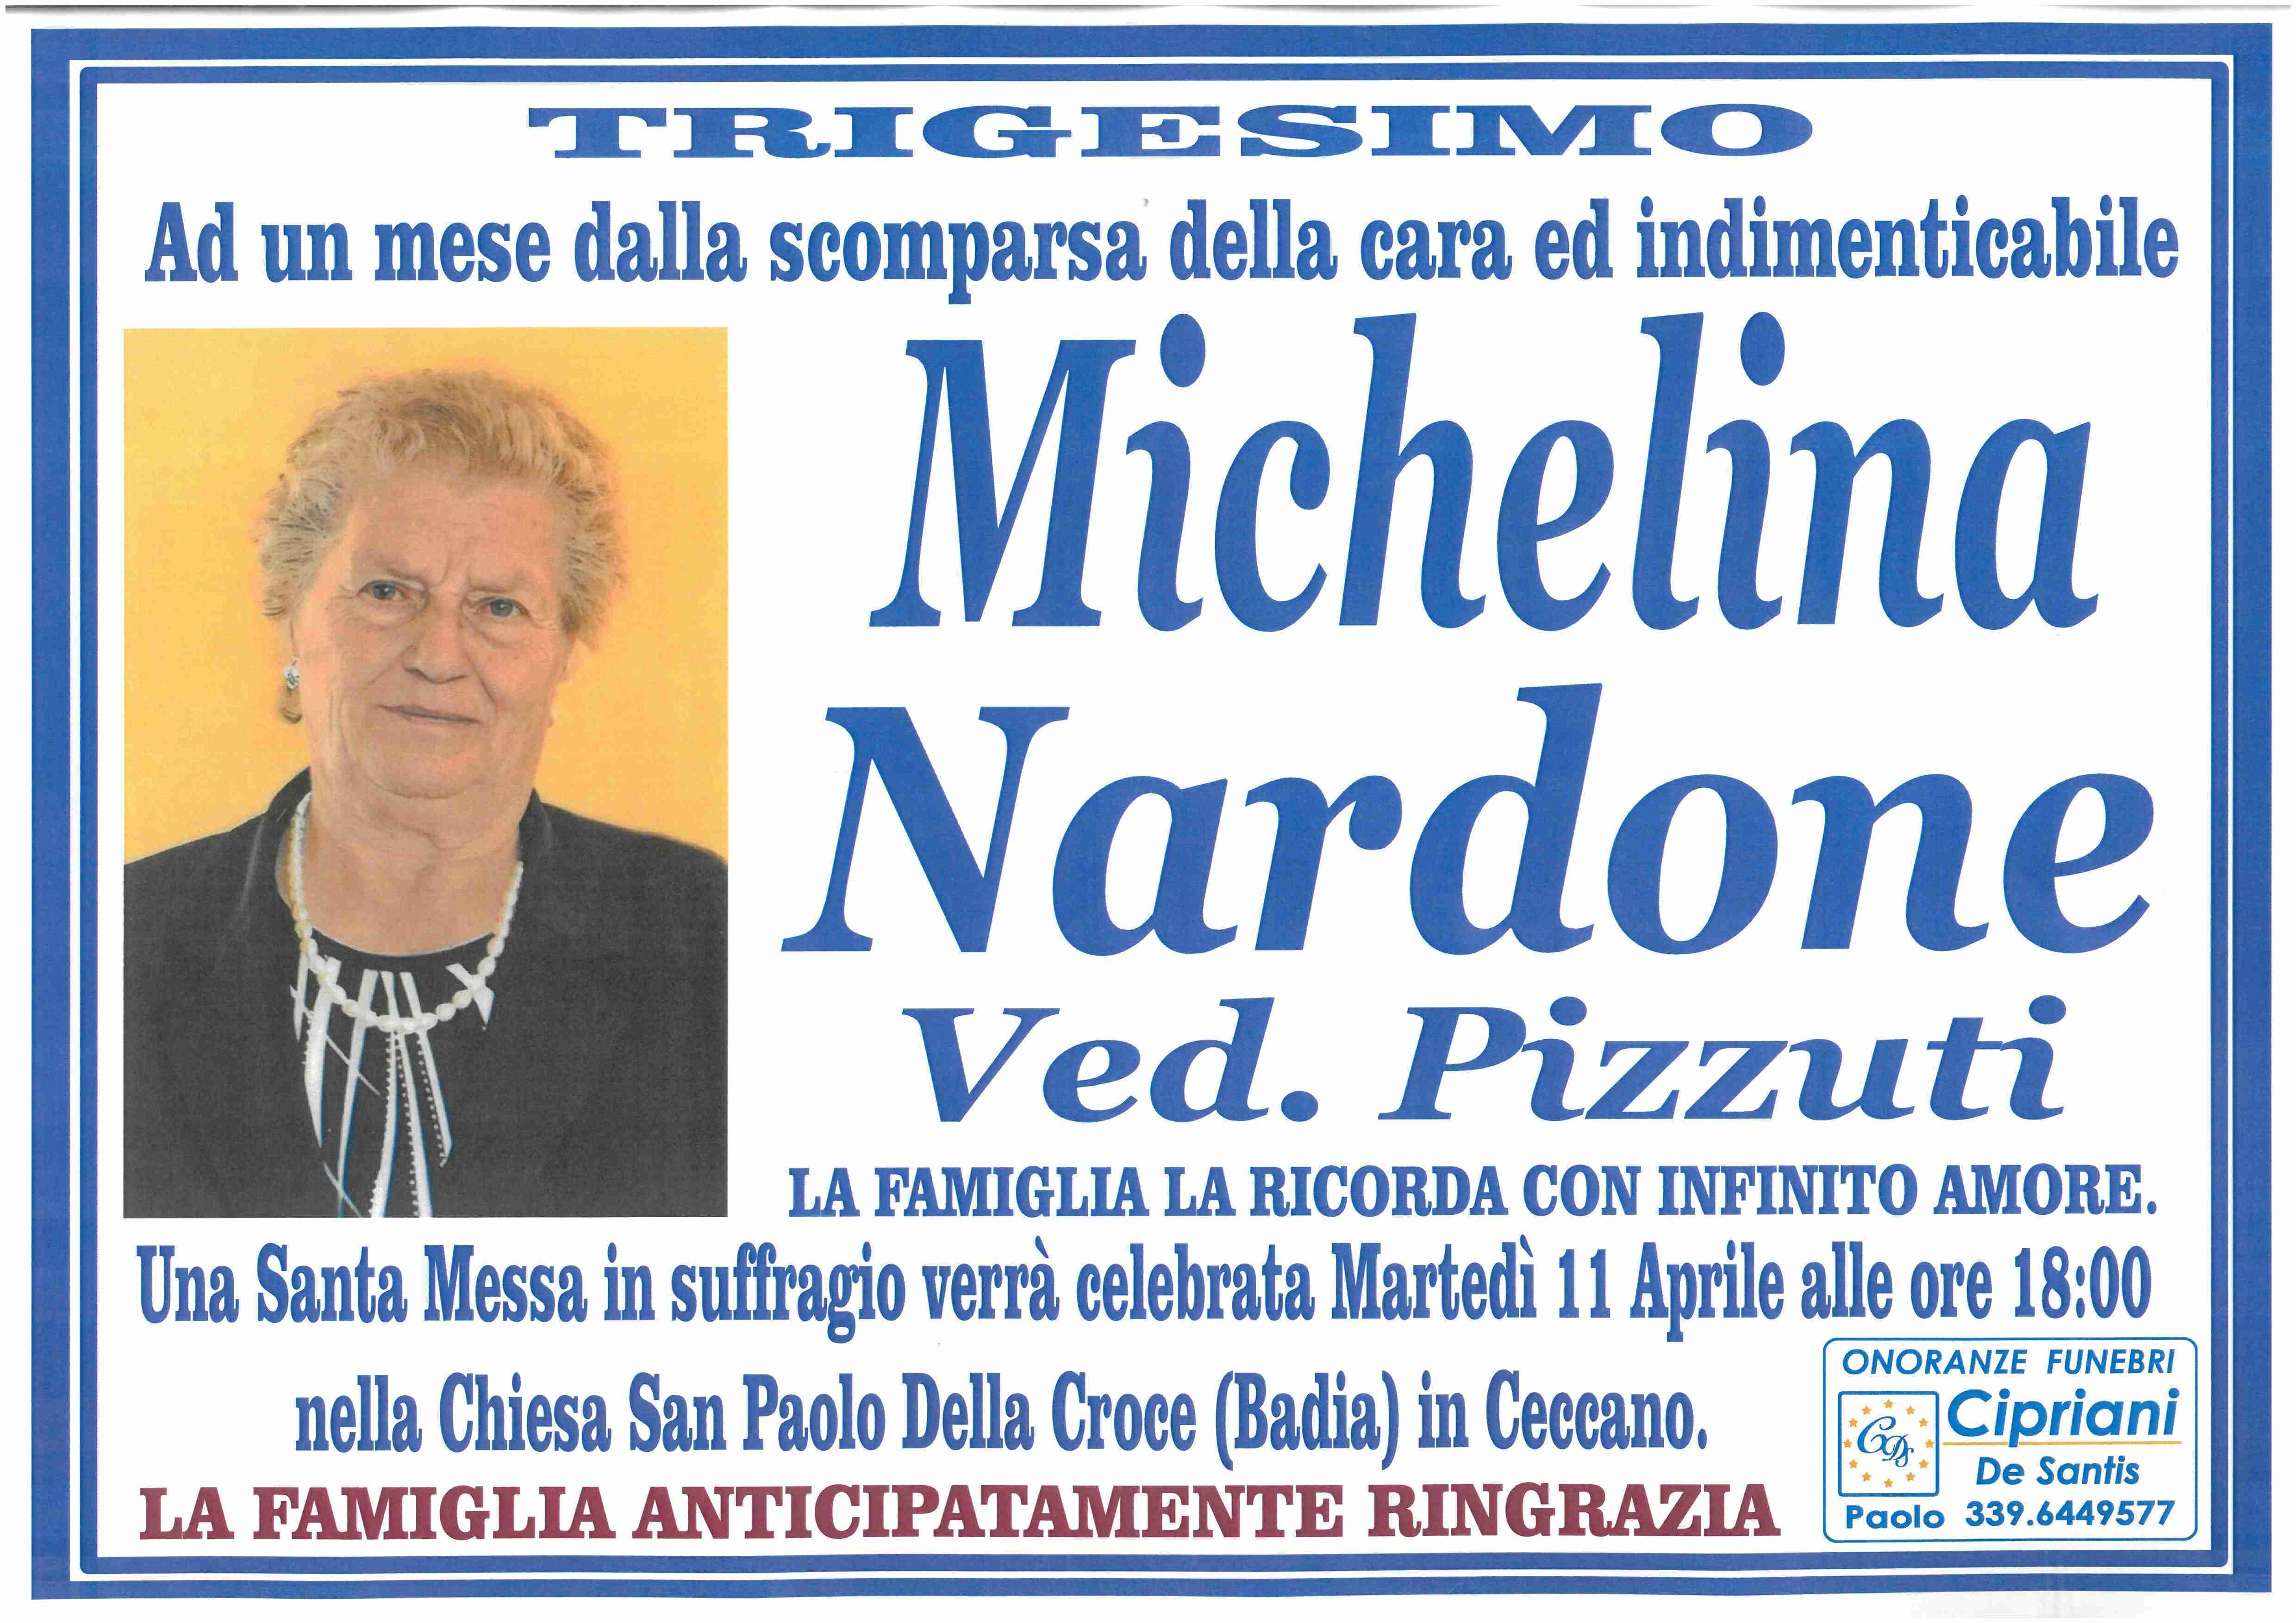 Michelina Nardone